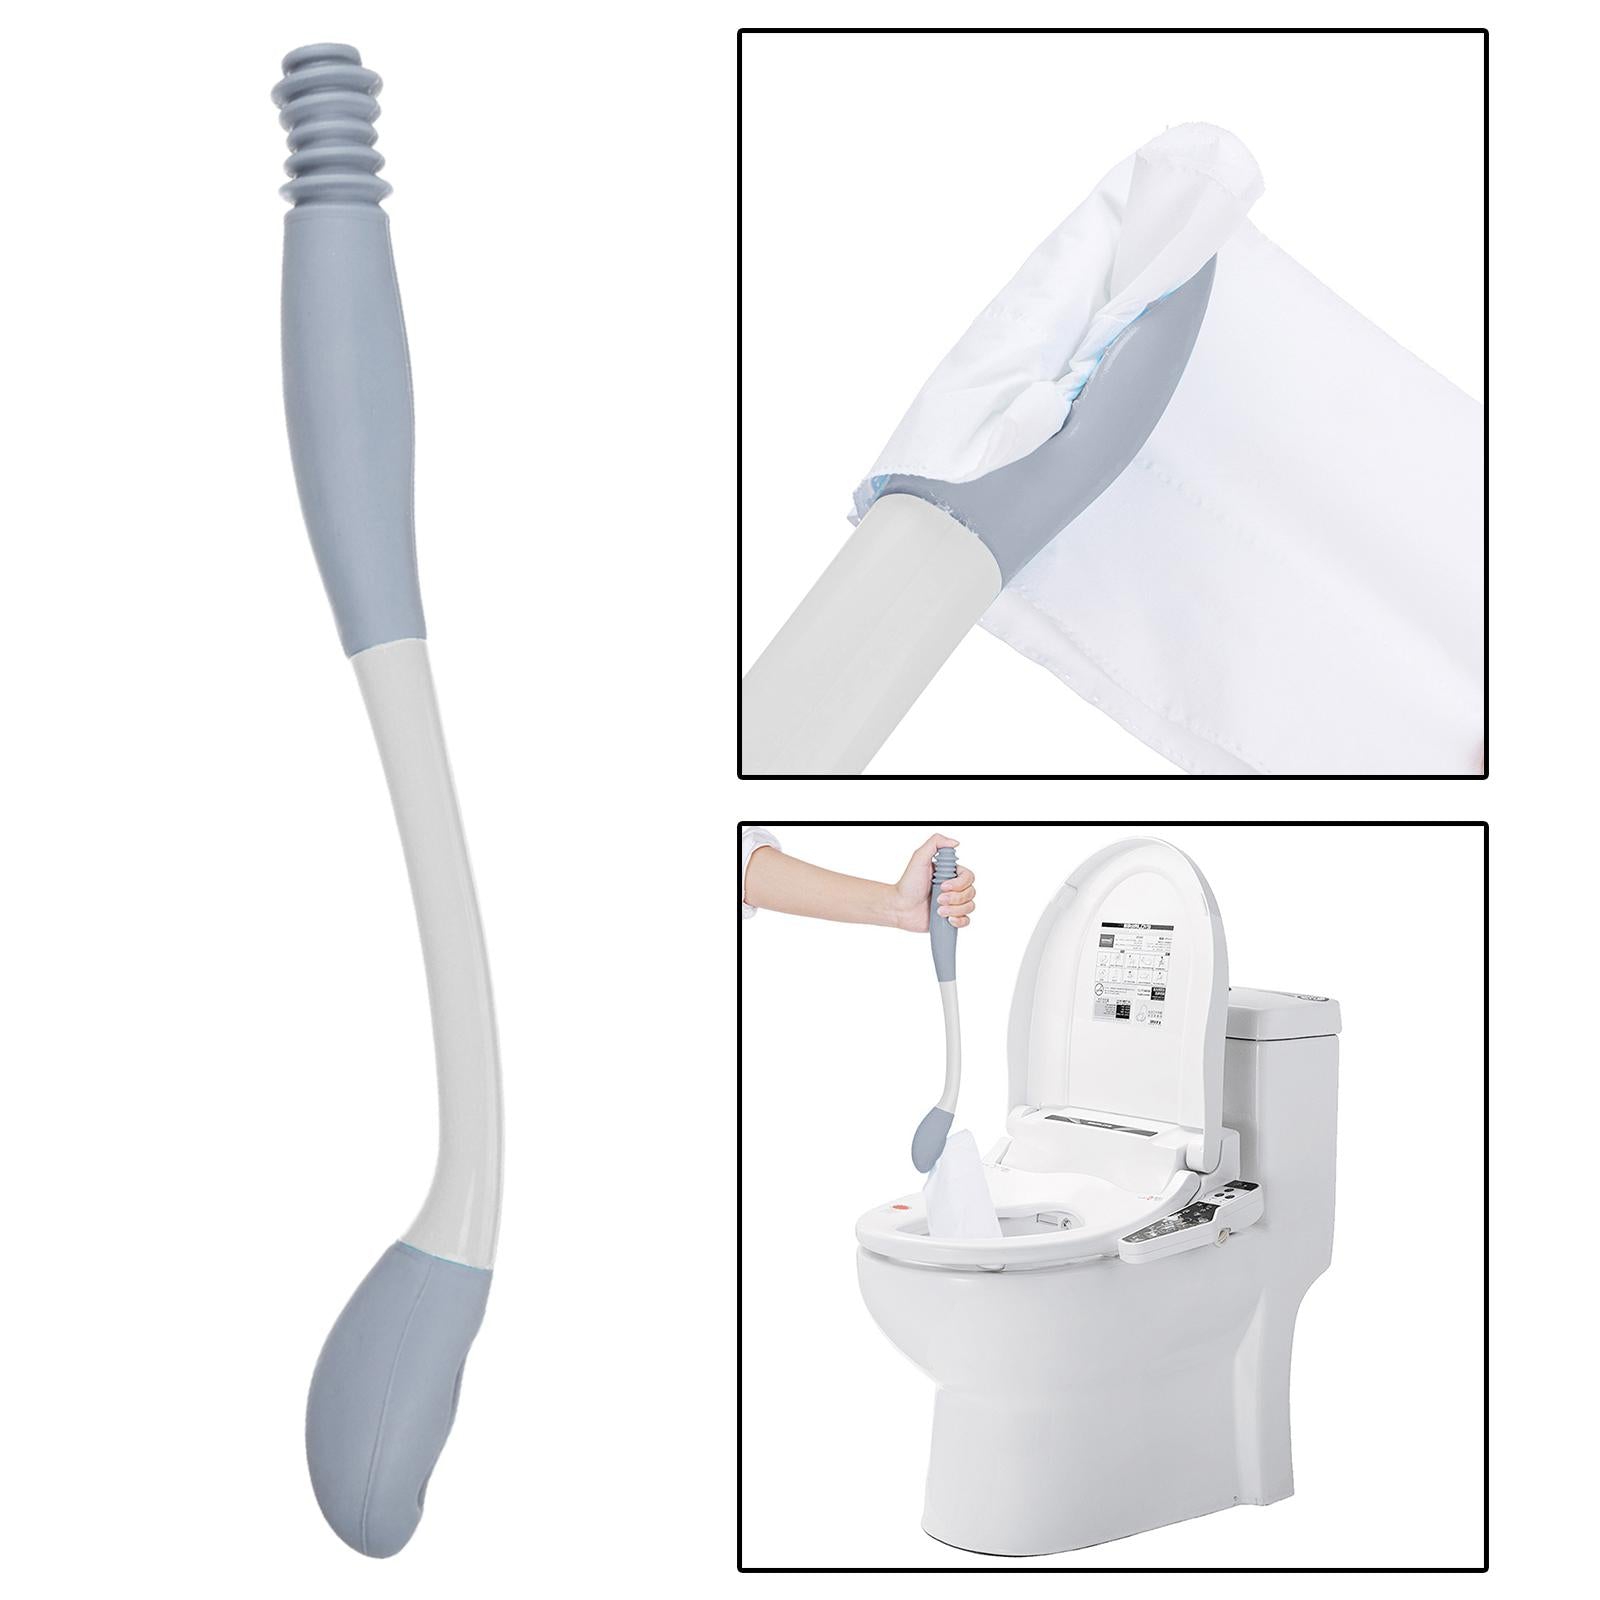 Bottom Toileting Aid Tool Handled Tissue Grip Helper Grey White